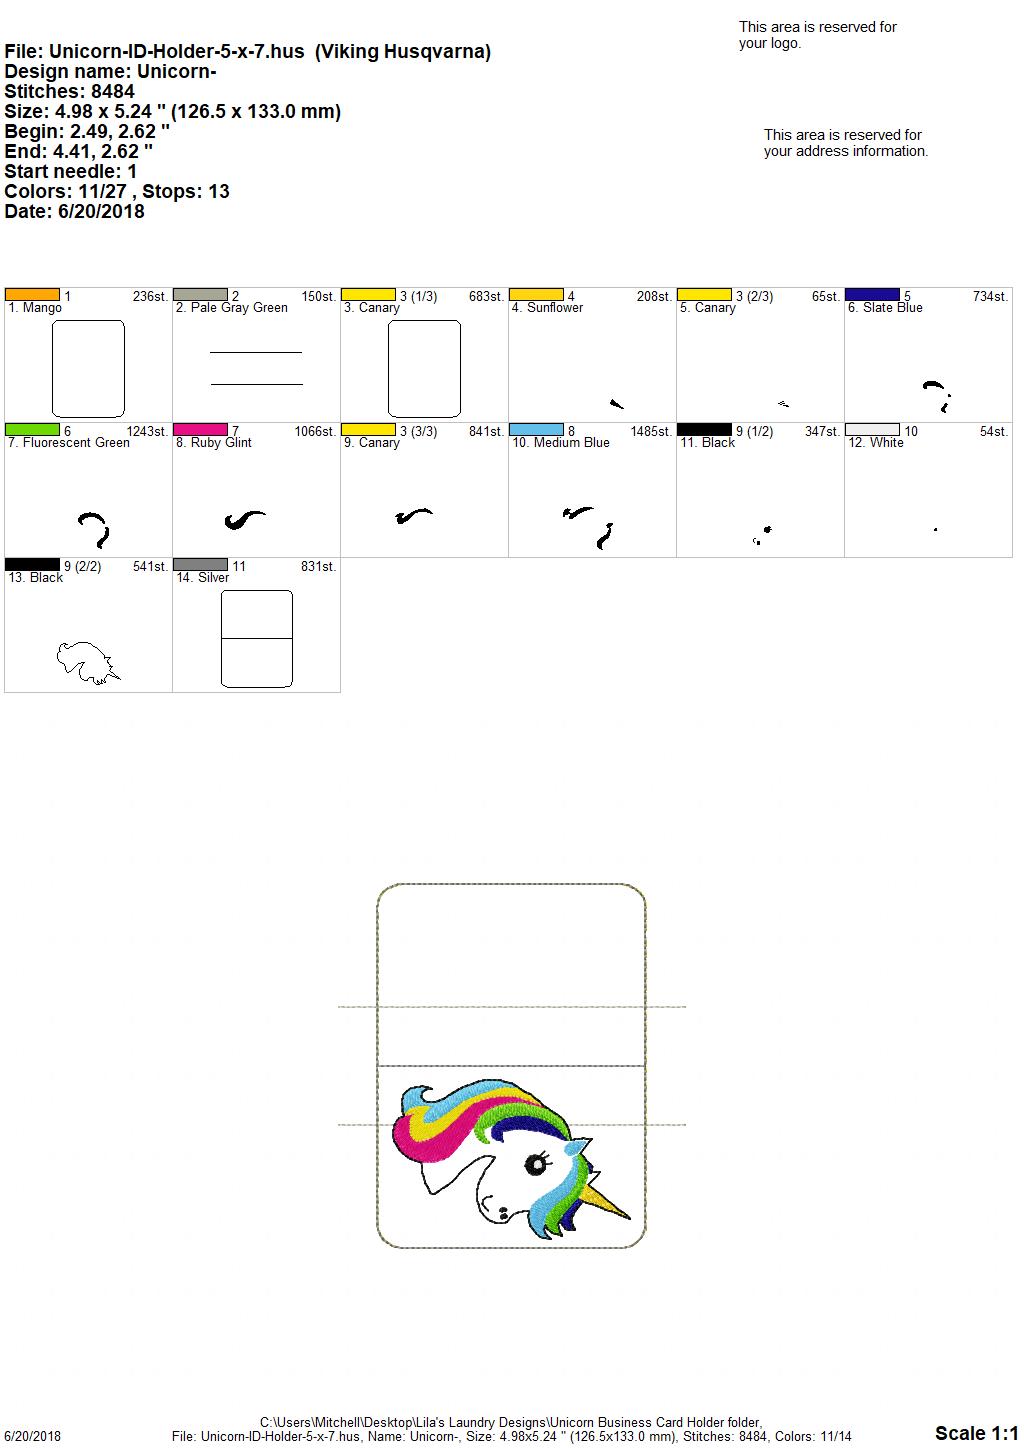 Unicorn Business Card Holder - 5 x 7 - Embroidery Design - DIGITAL Embroidery DESIGN